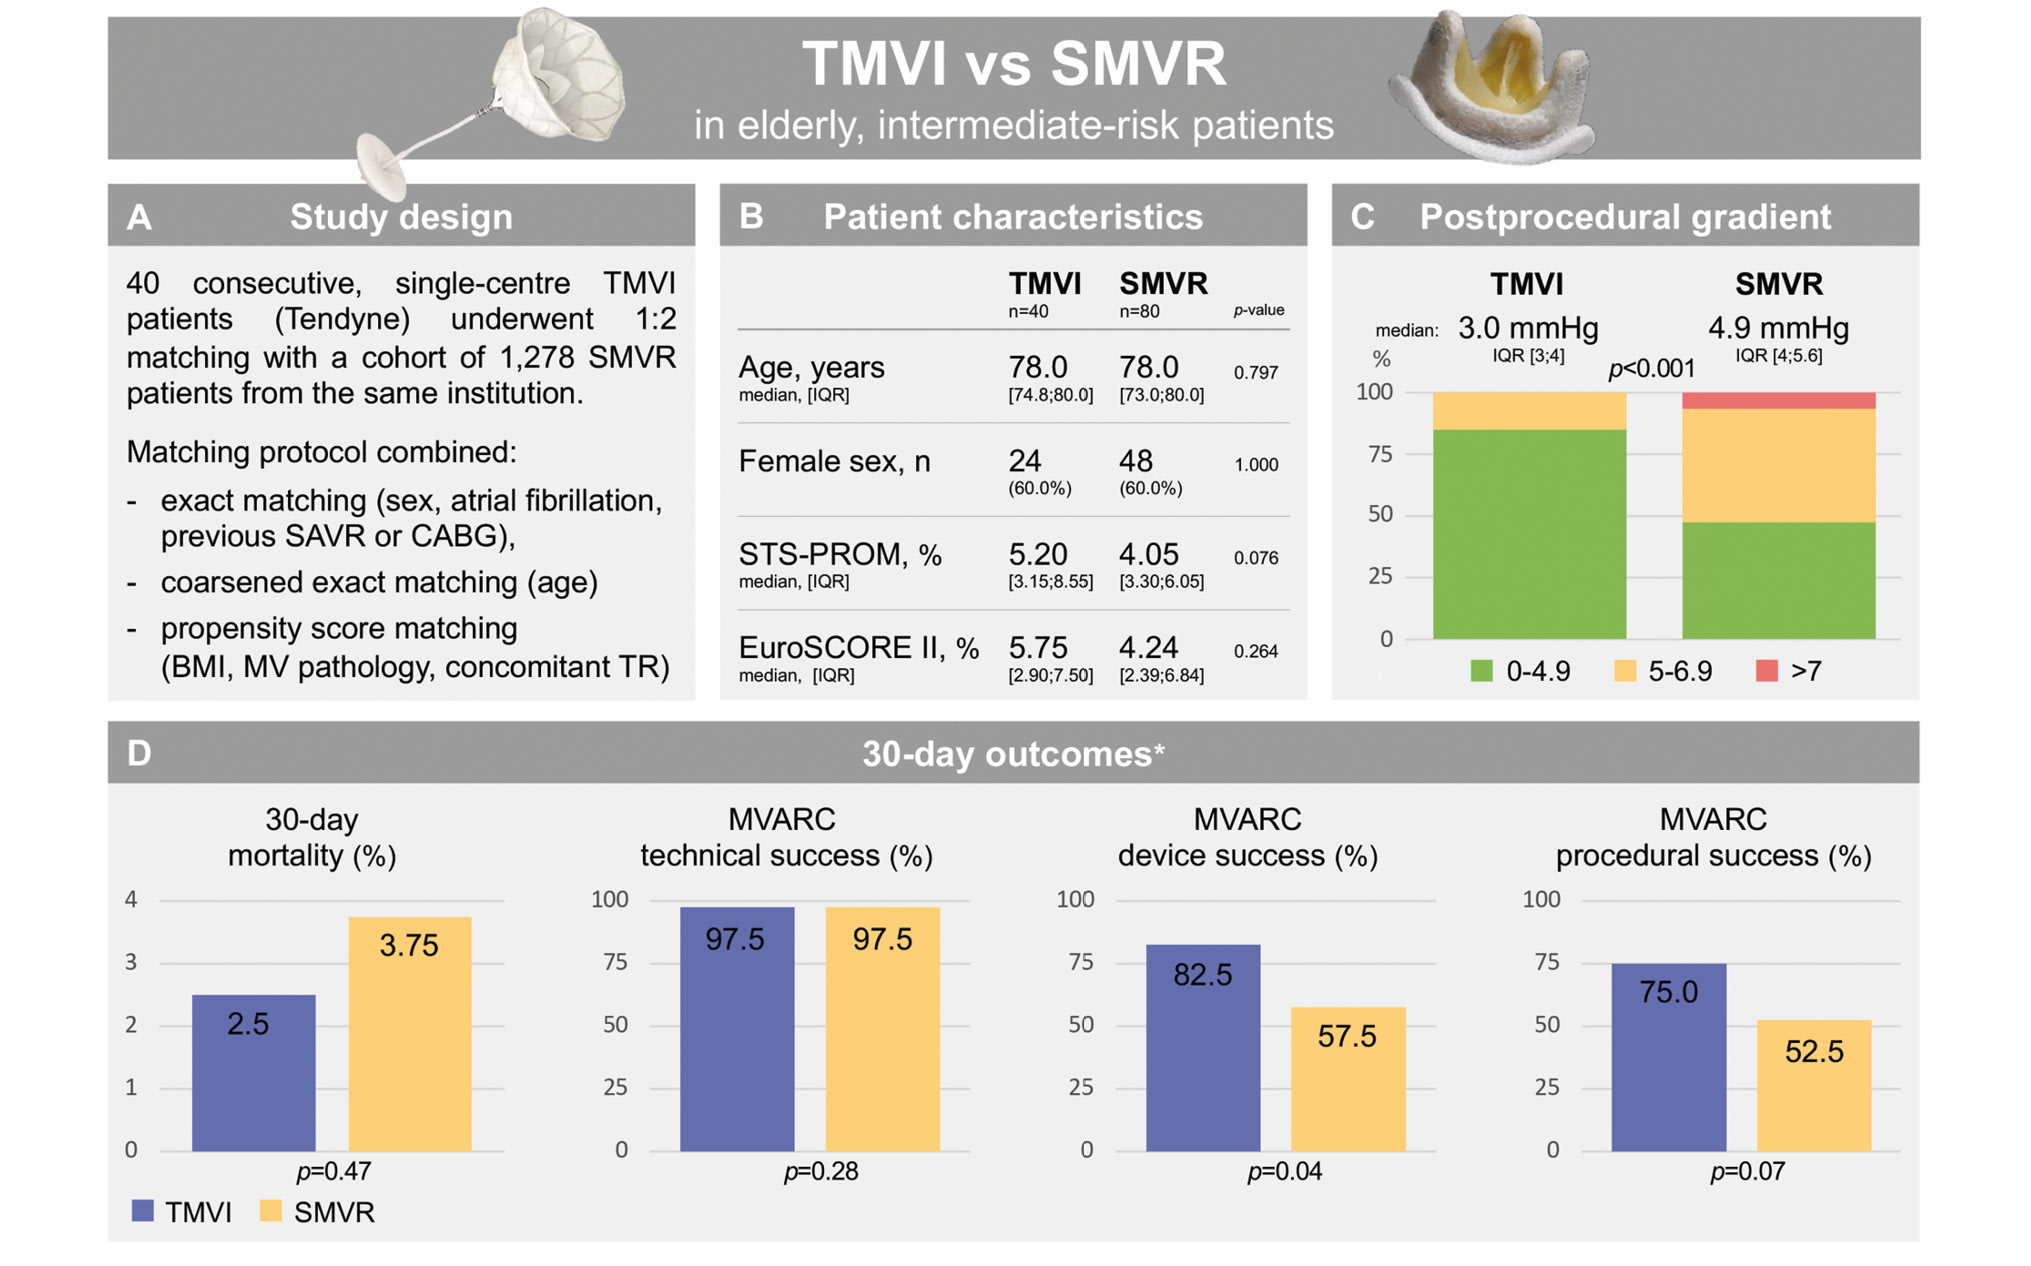 TMVI versus SMVR in intermediate-risk patients